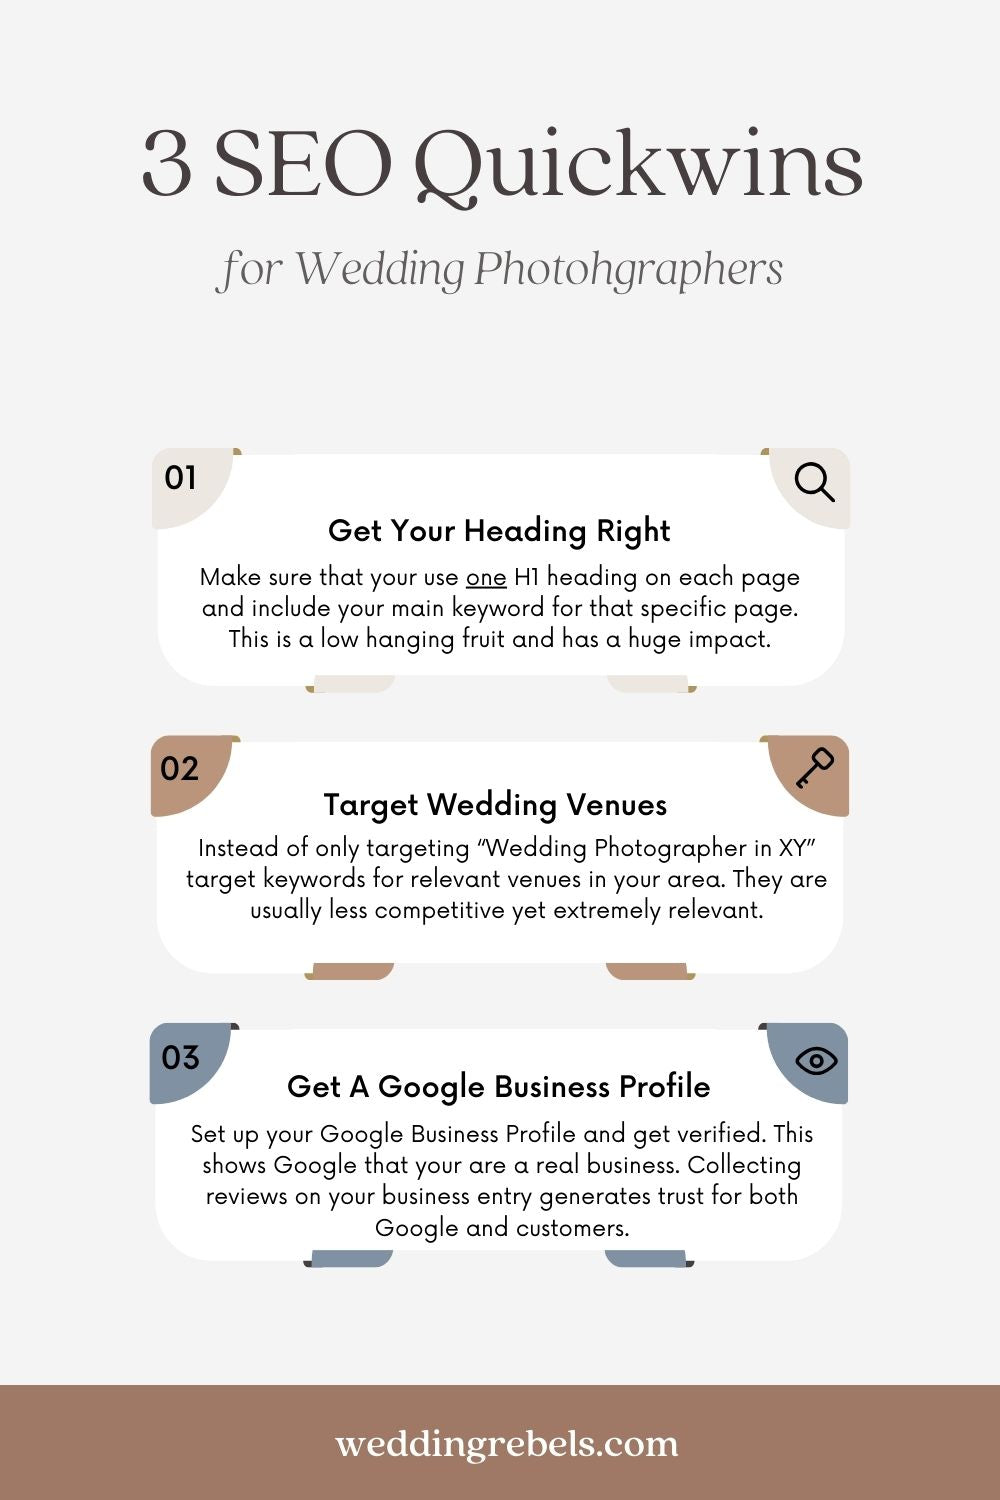 SEO Quick-wins for Wedding Photographers